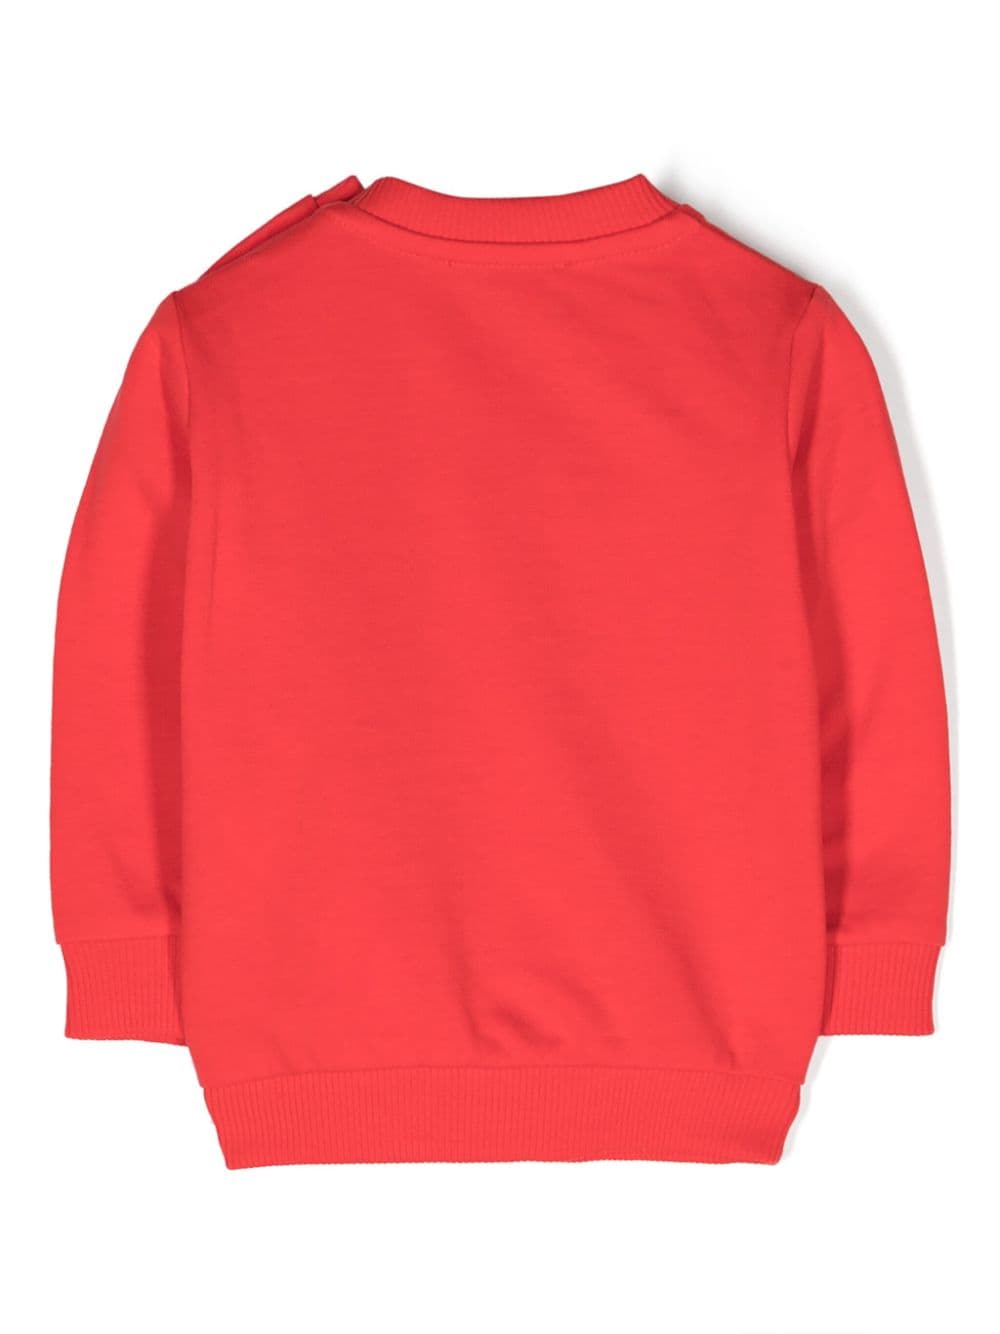 Red sweatshirt for newborns with logo